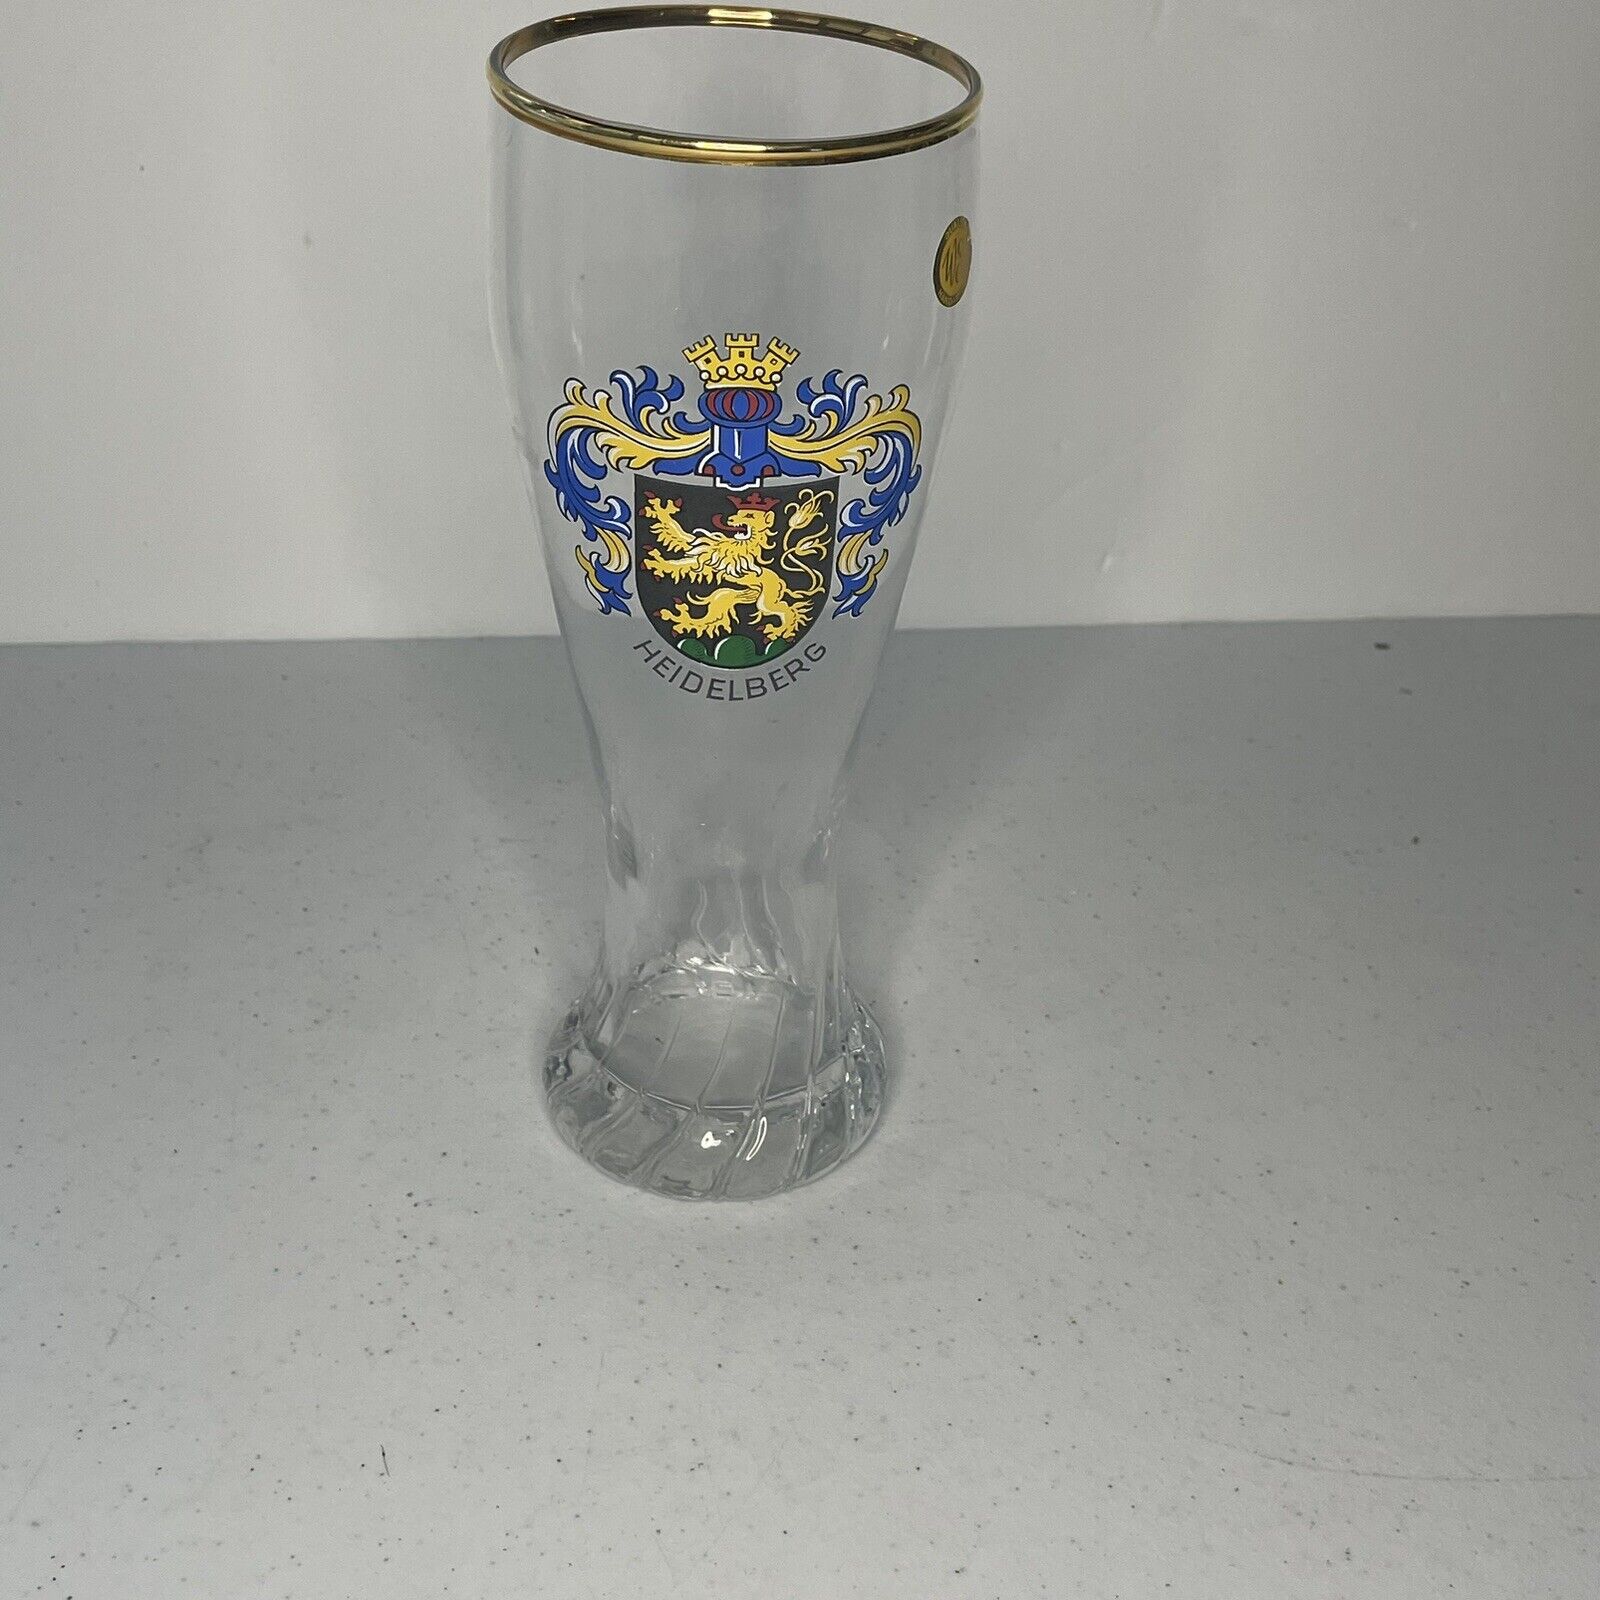 Vintage Heidelberg Crest German Glass Drinking Boot 0.5L Gold Colored Trim